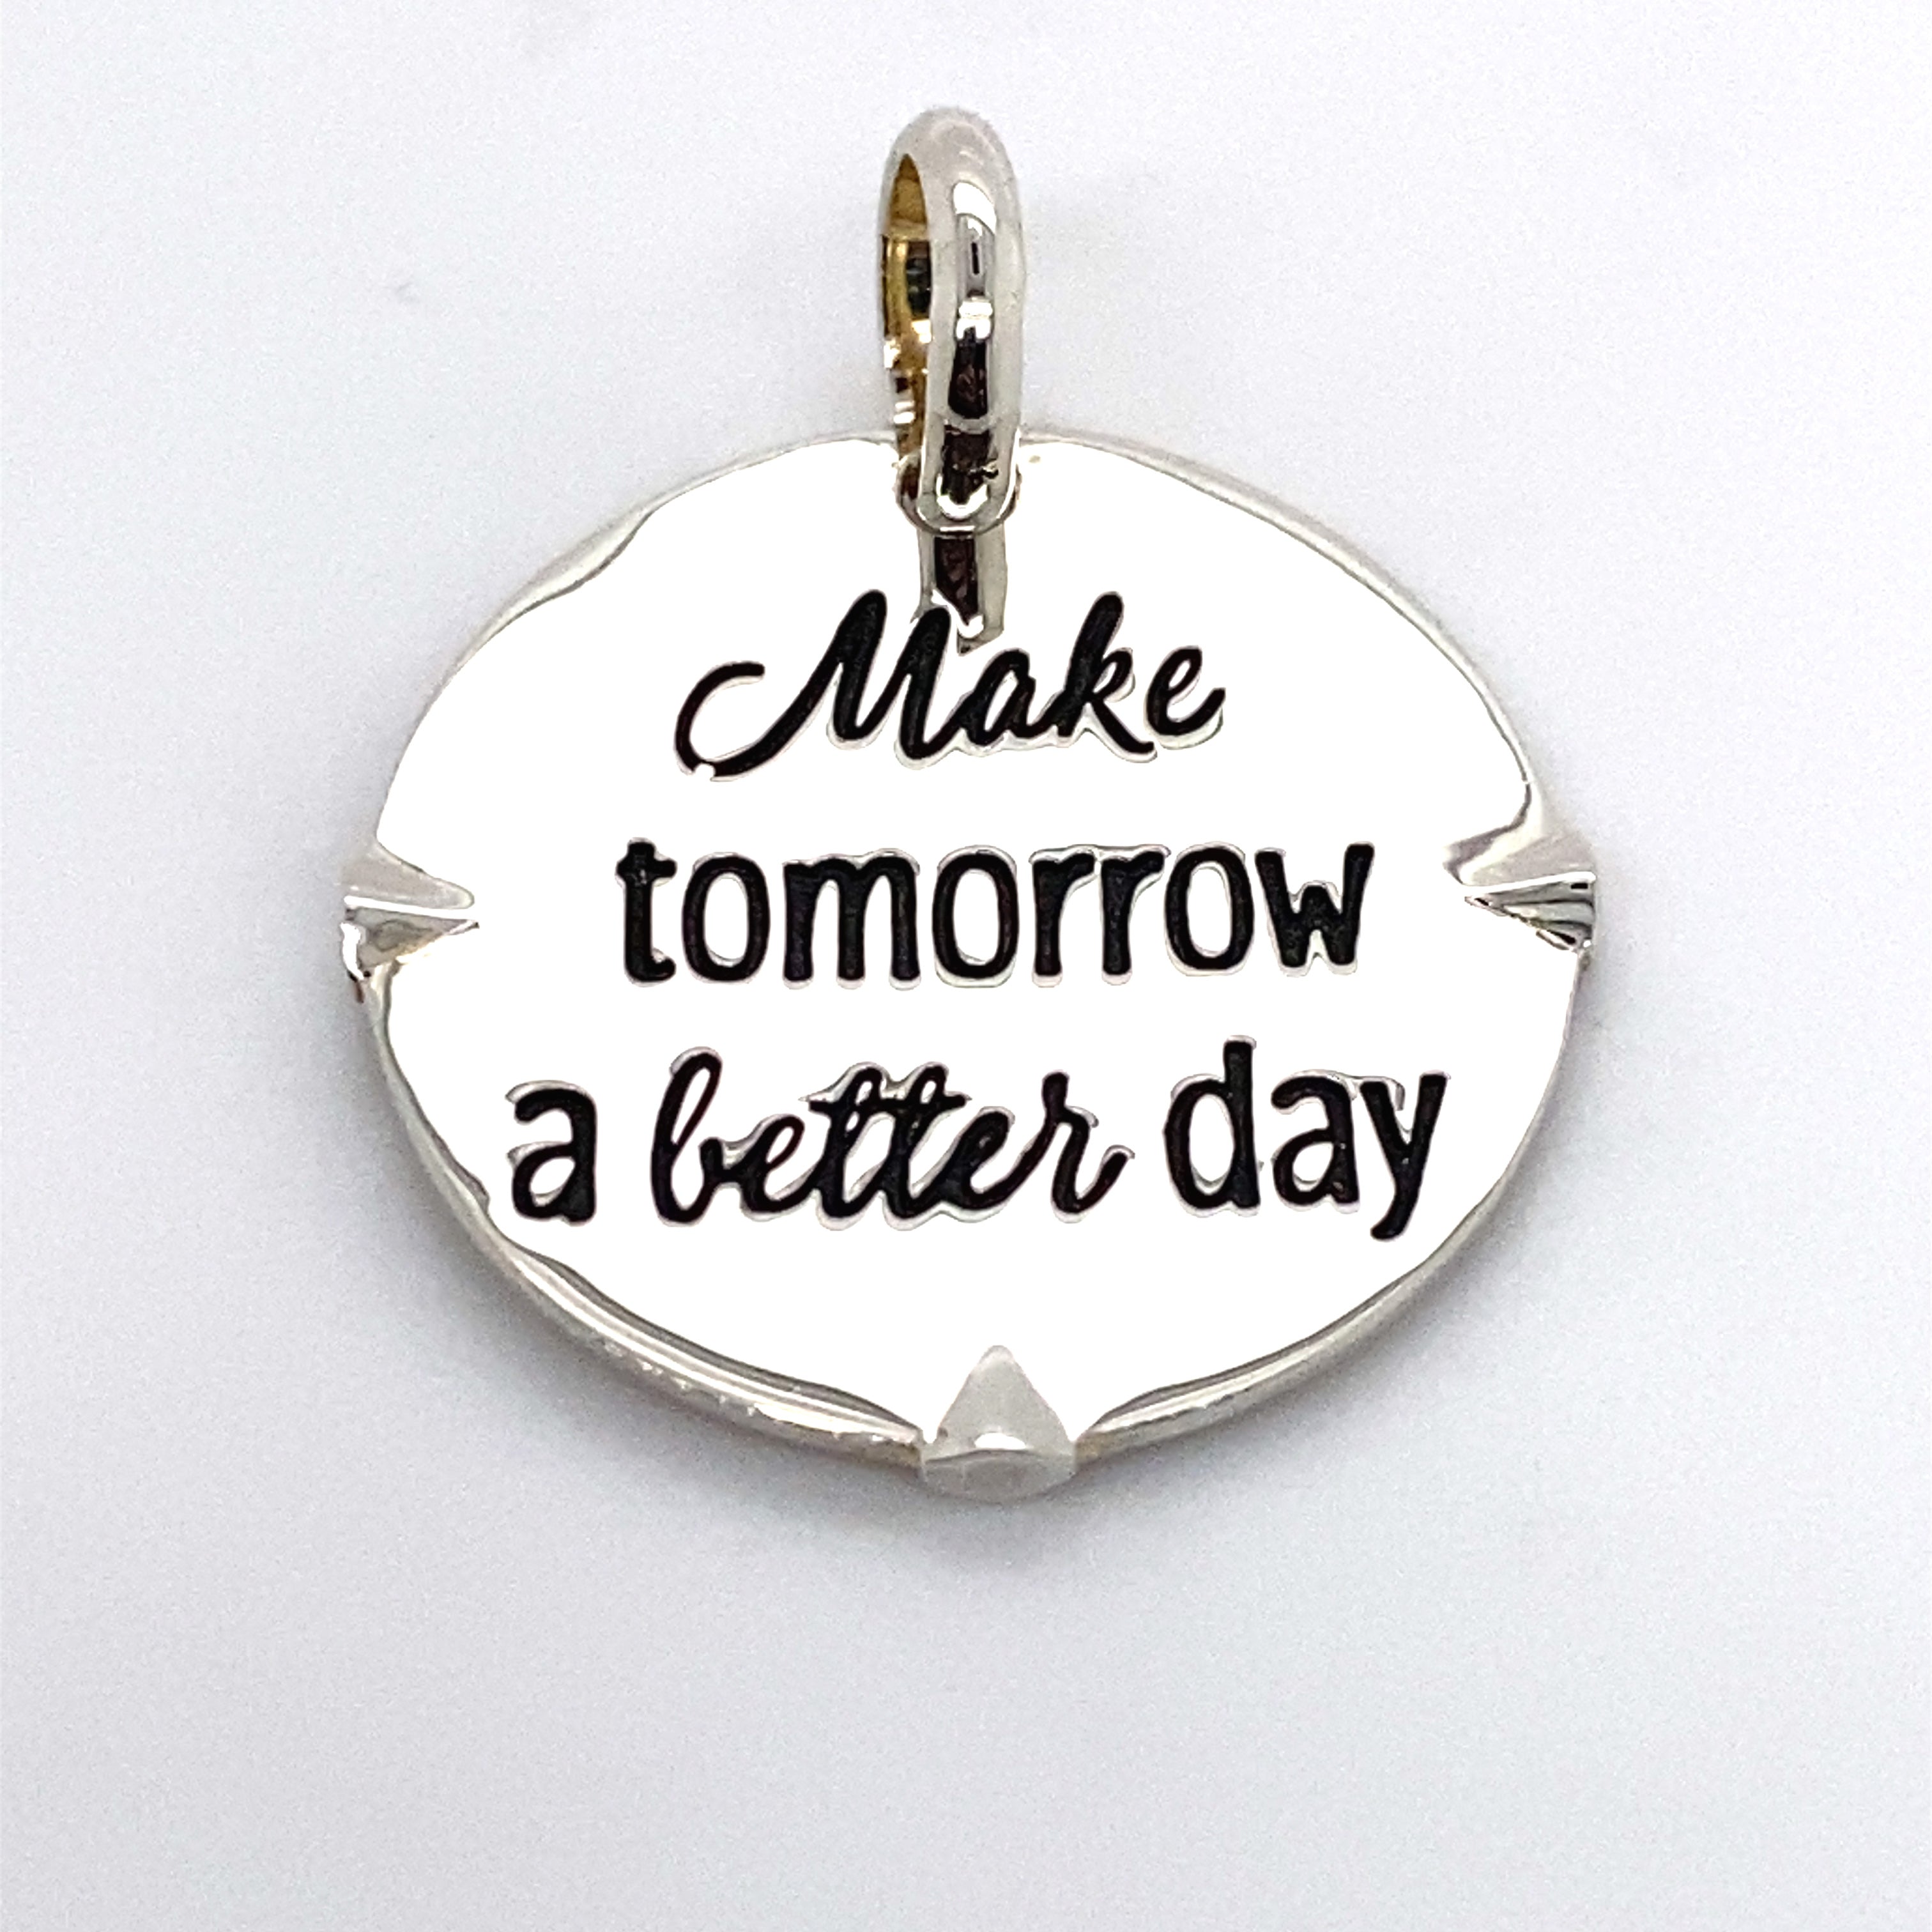 make tomorrow a better day pendant charm